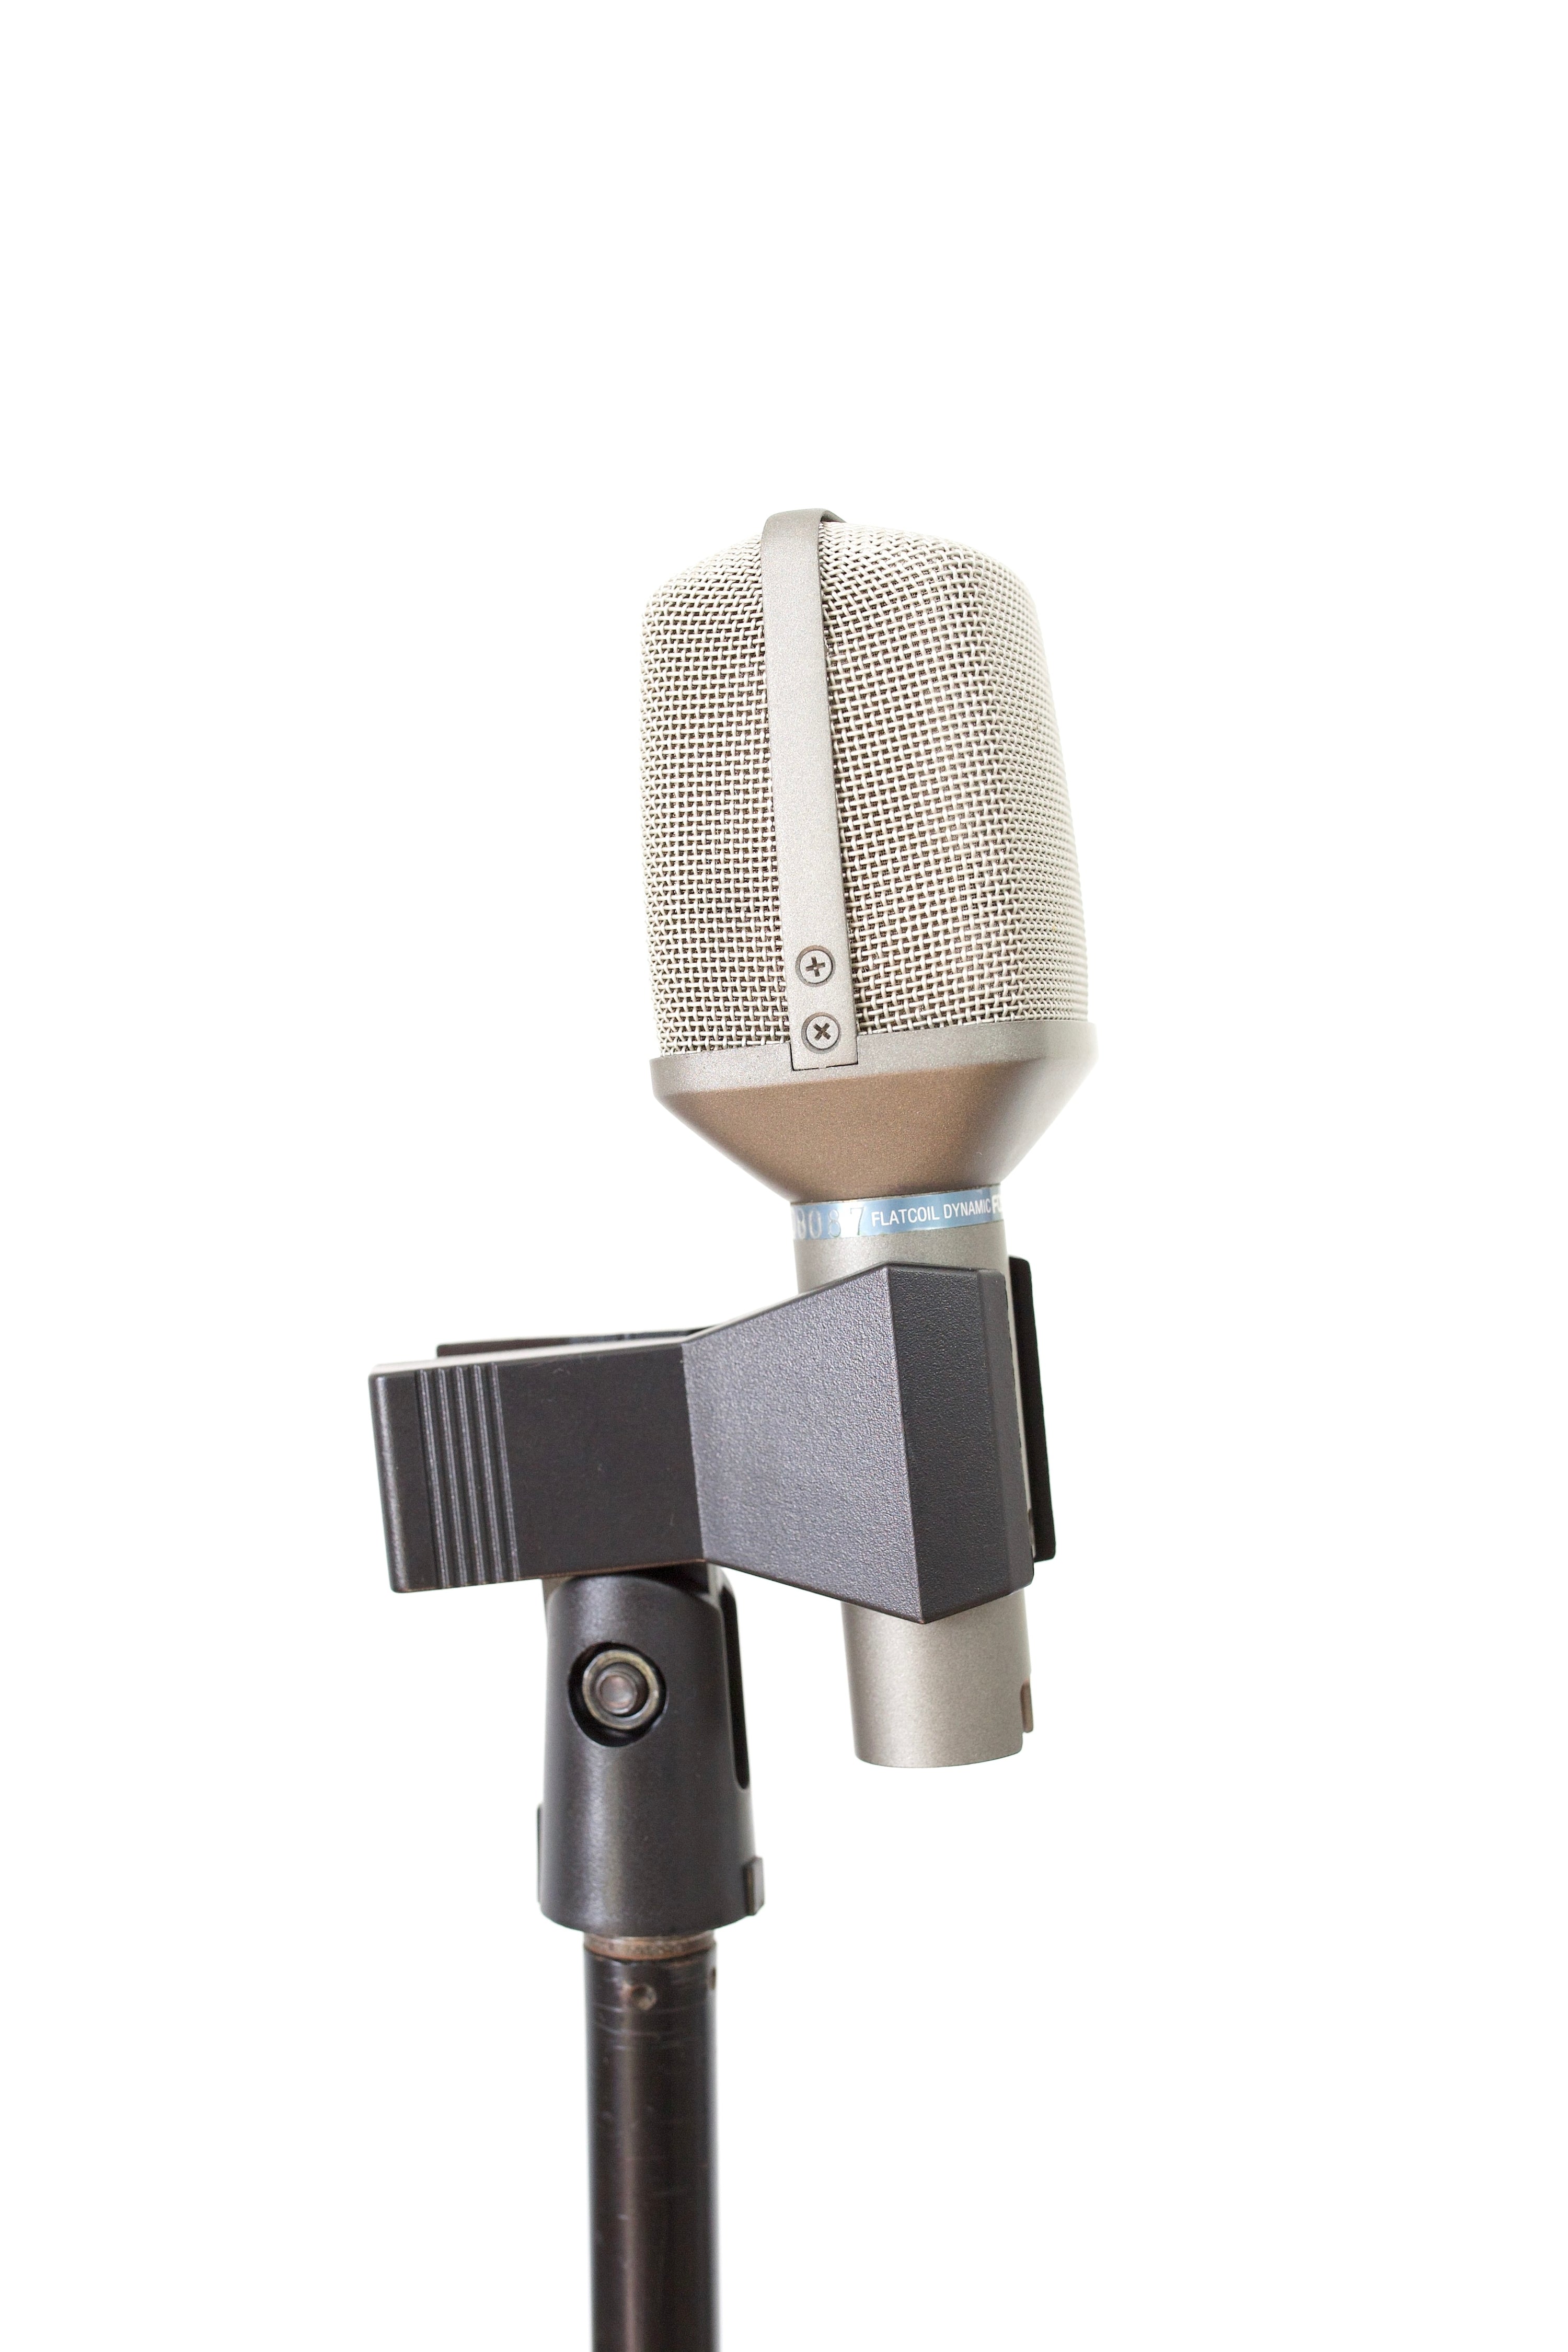 Fostex M80RP Printed Ribbon Microphone